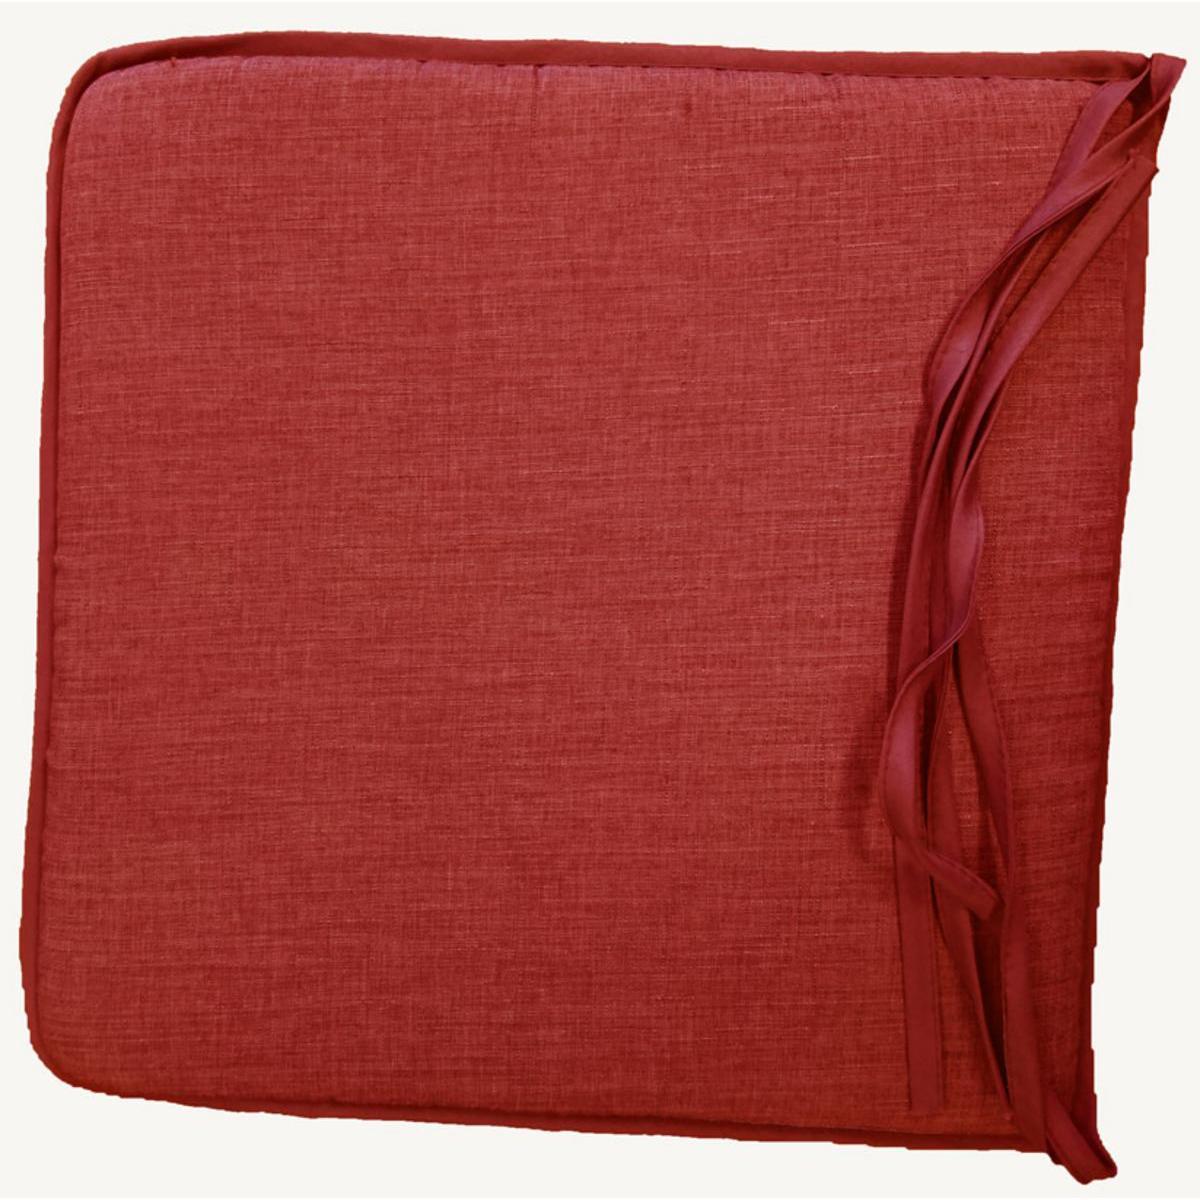 Galette de chaise - 100 % Polyester - 40 x 40 cm - Rouge